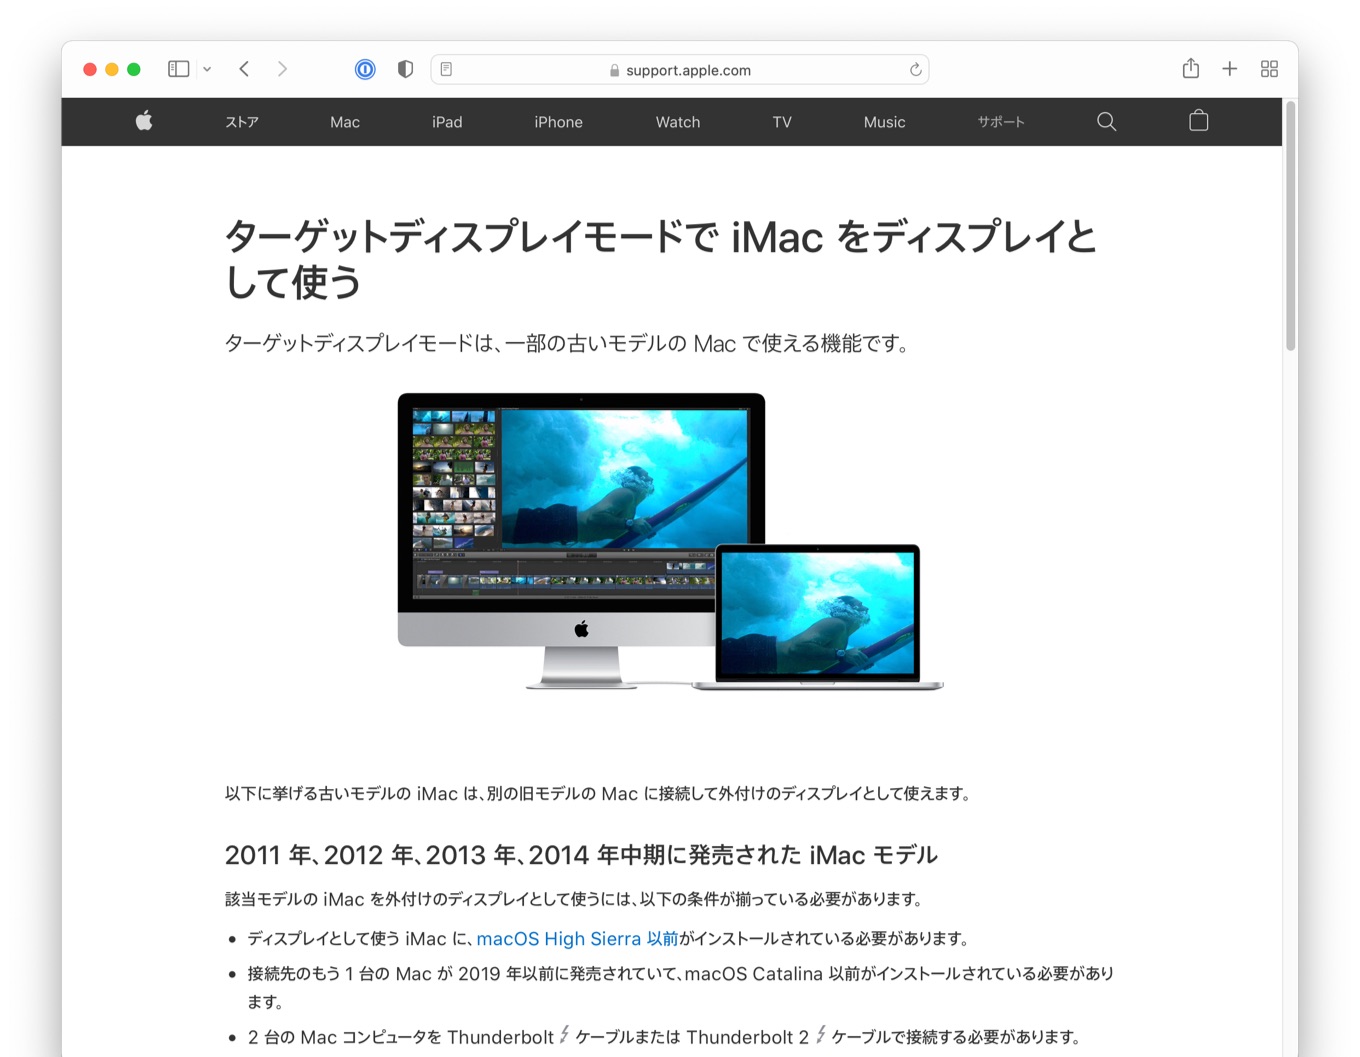 iMac 5K not support target display mode